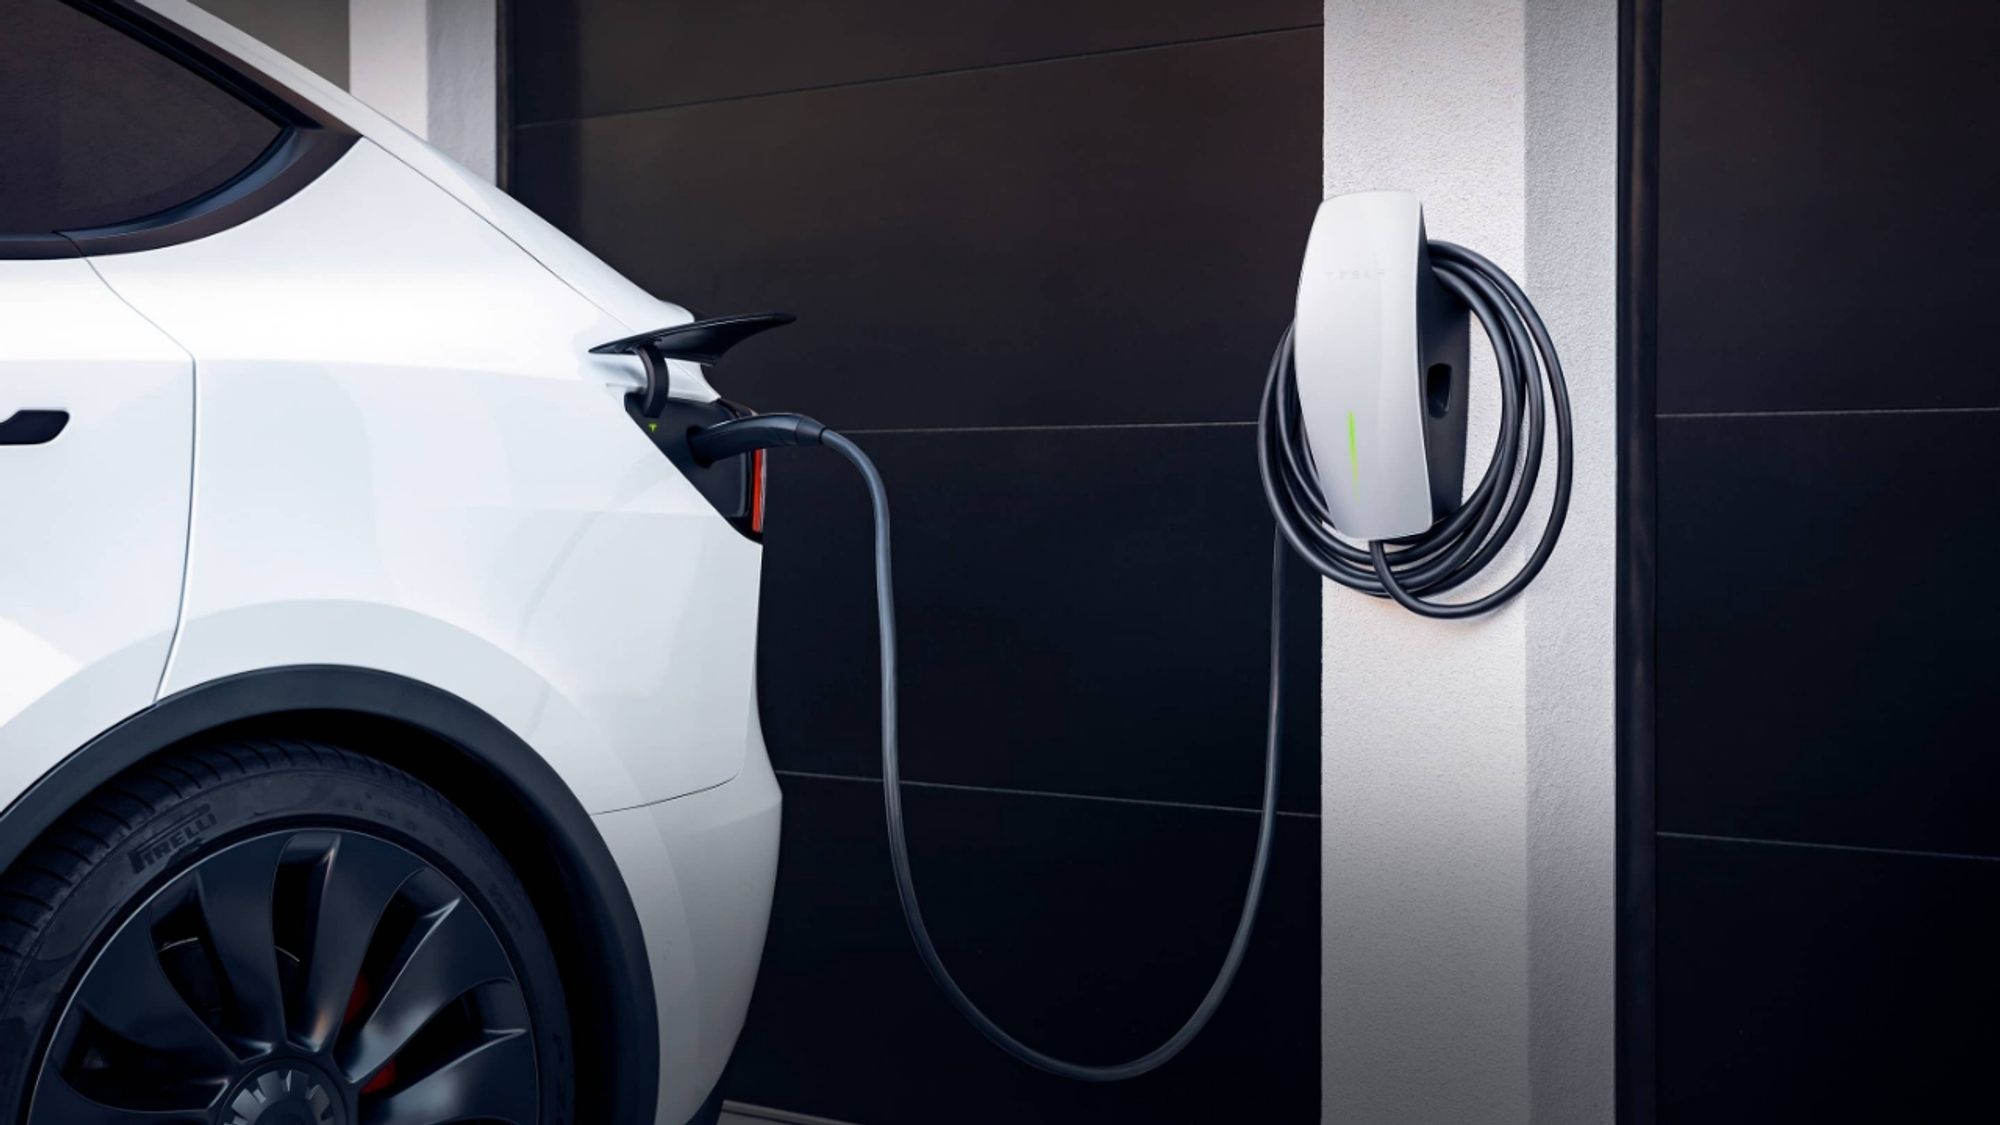 Tesla Model 3 & Y Home Charging Guide, Zecar, Resources